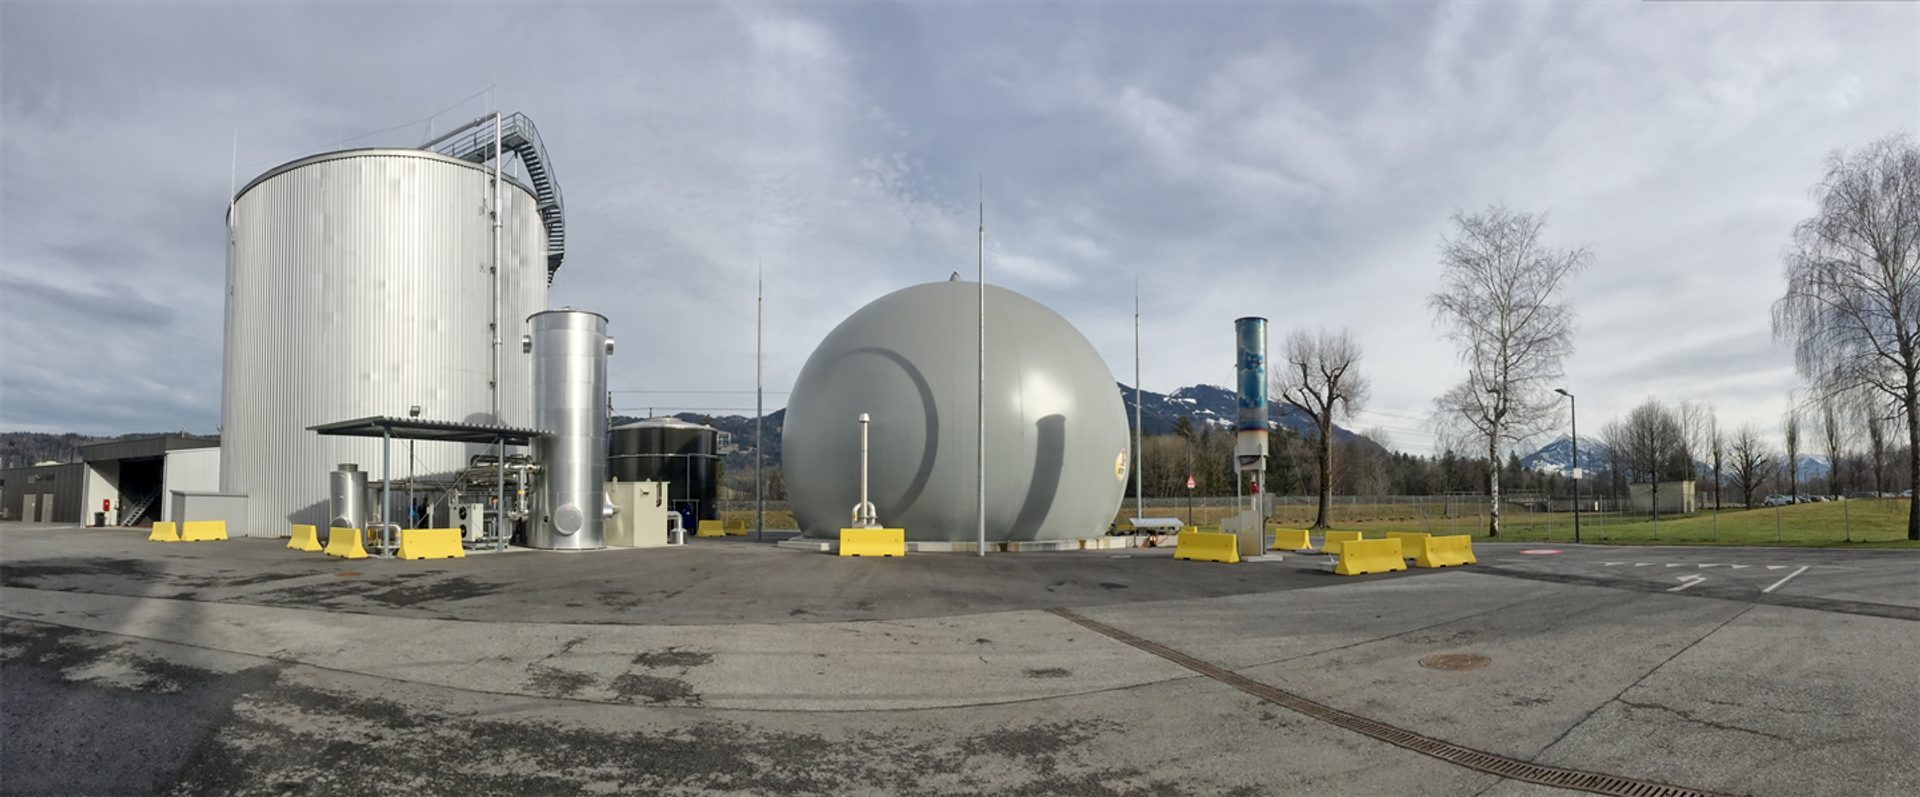 Ennox Biogas Technology GmbH